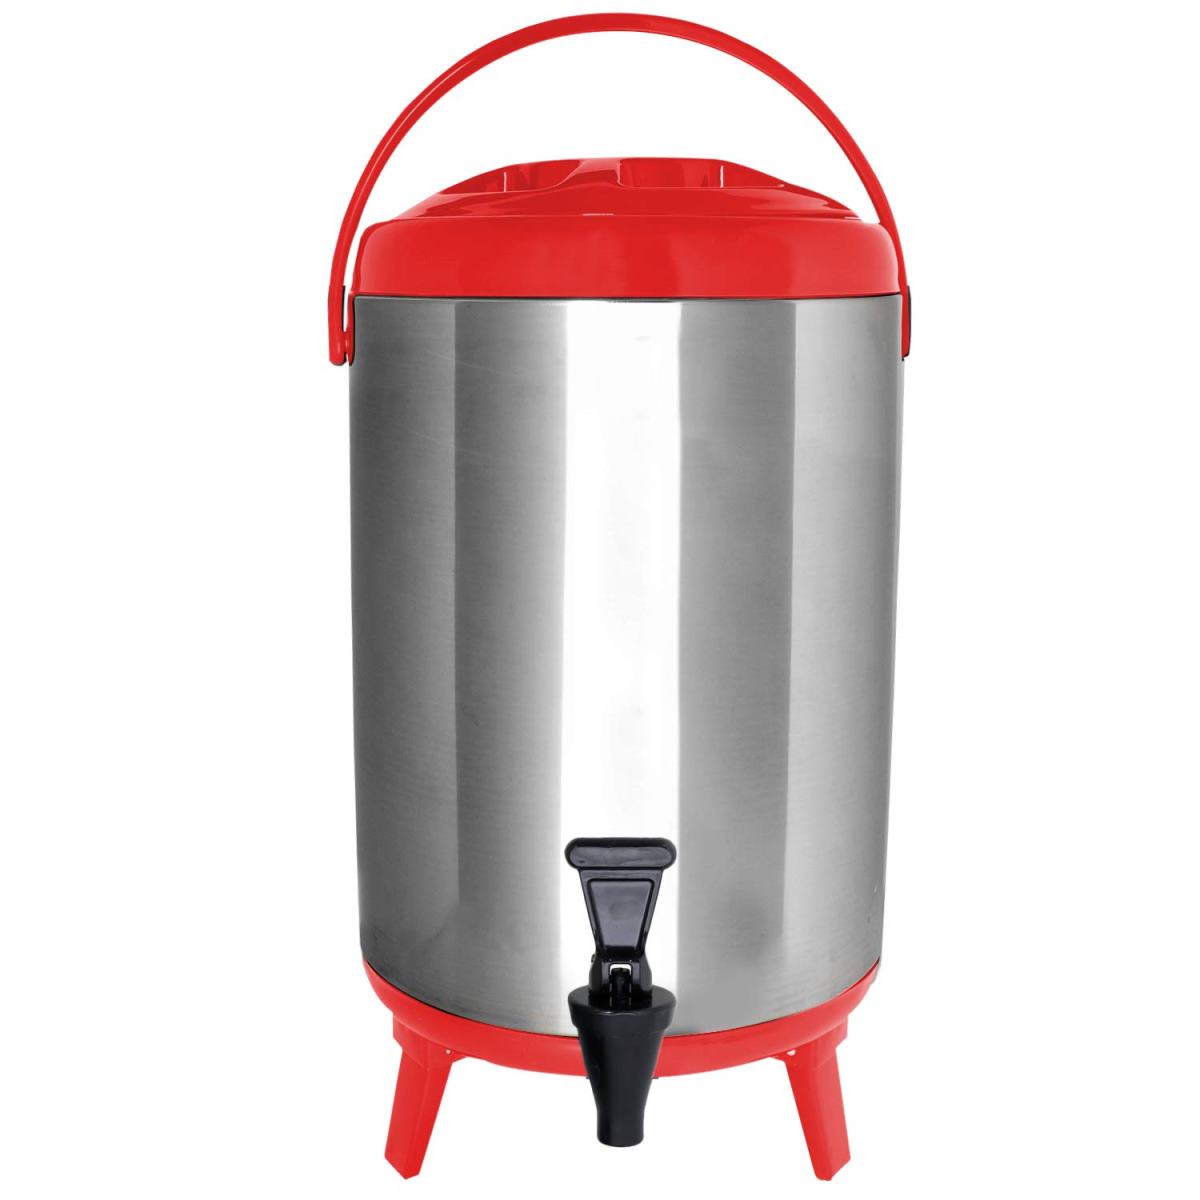 Vollum Stainless Steel Insulated Liquid Dispenser - 10 Liter, Red